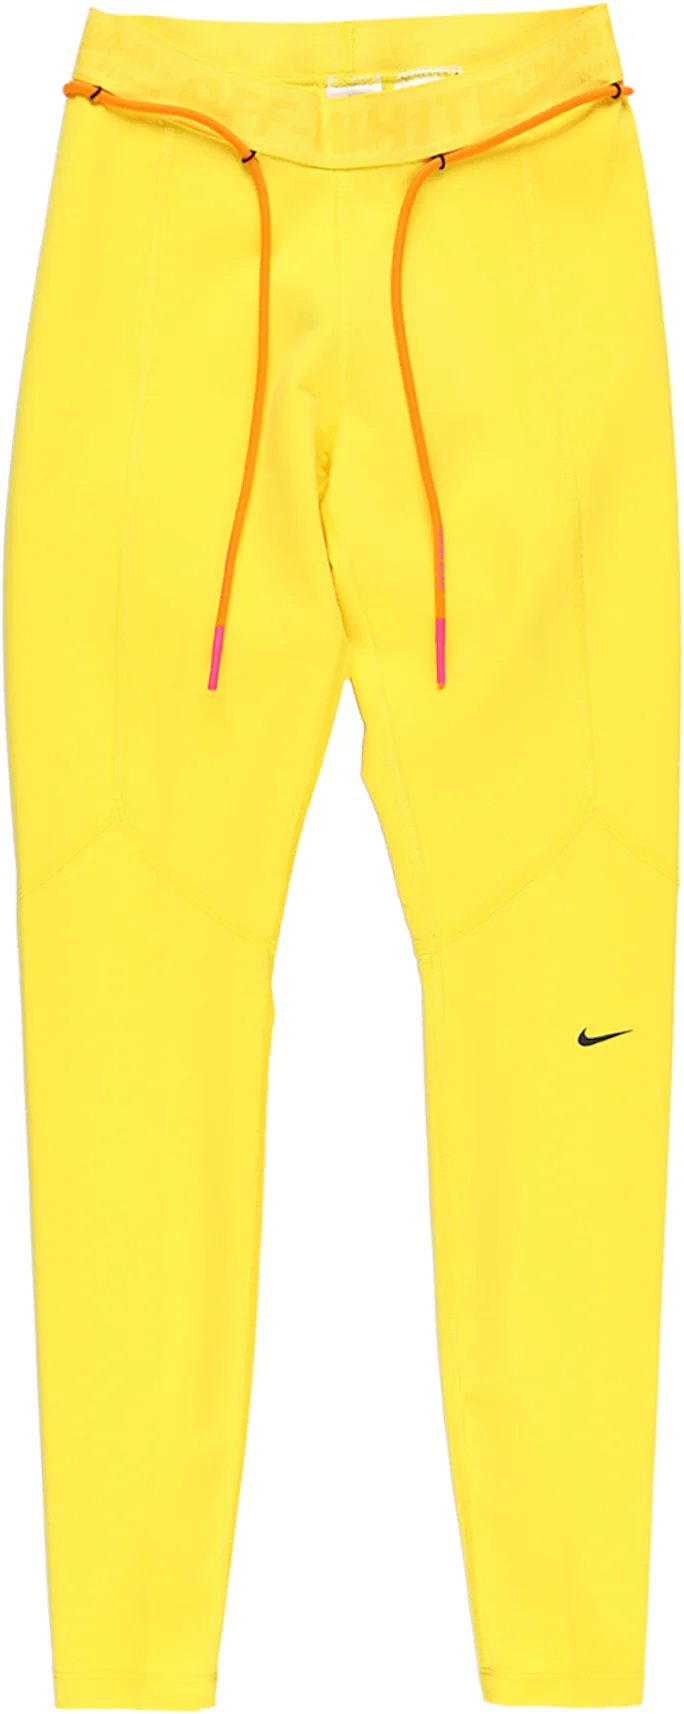 OFF-WHITE x Nike Women's Tights Opti Yellow - SS20 - US